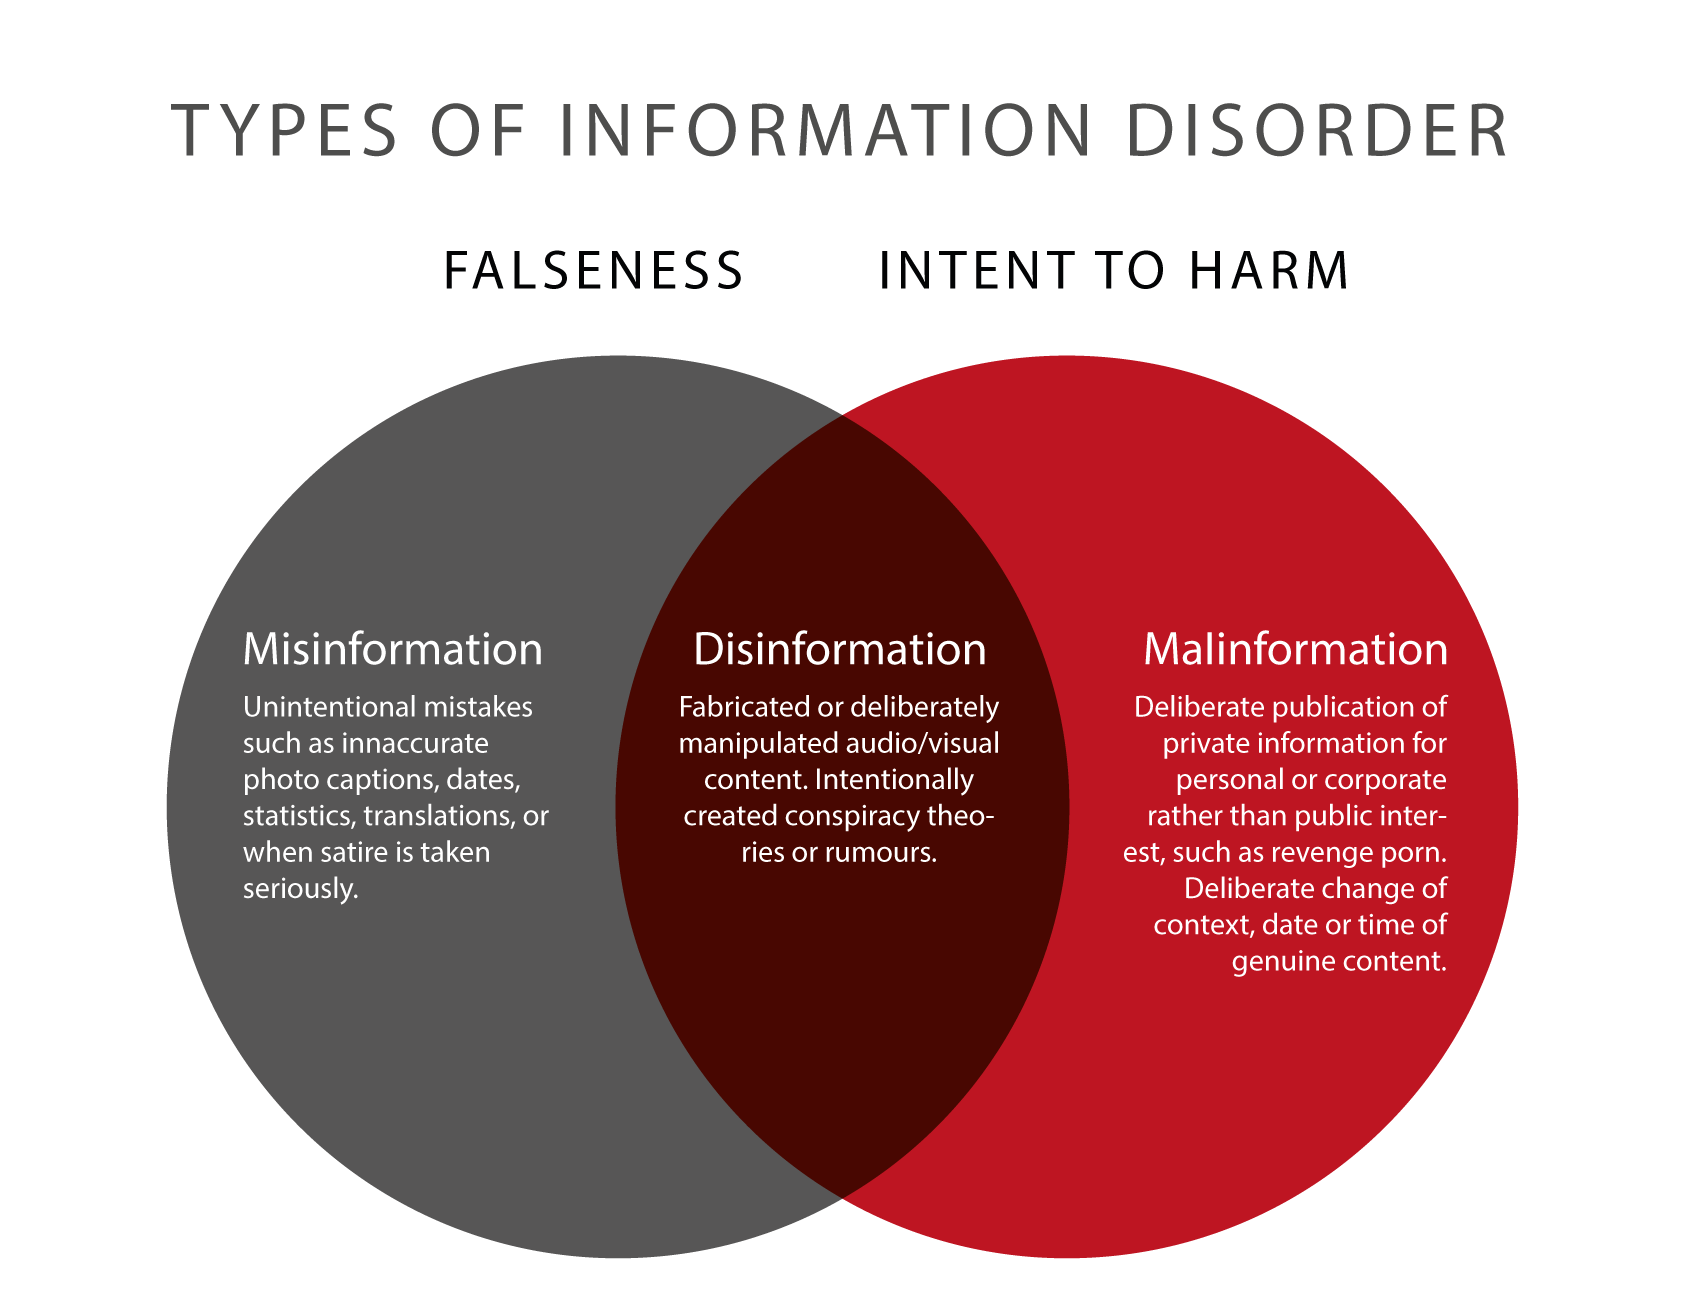 Types-of-Information-Disorder-Venn-Diagram.png